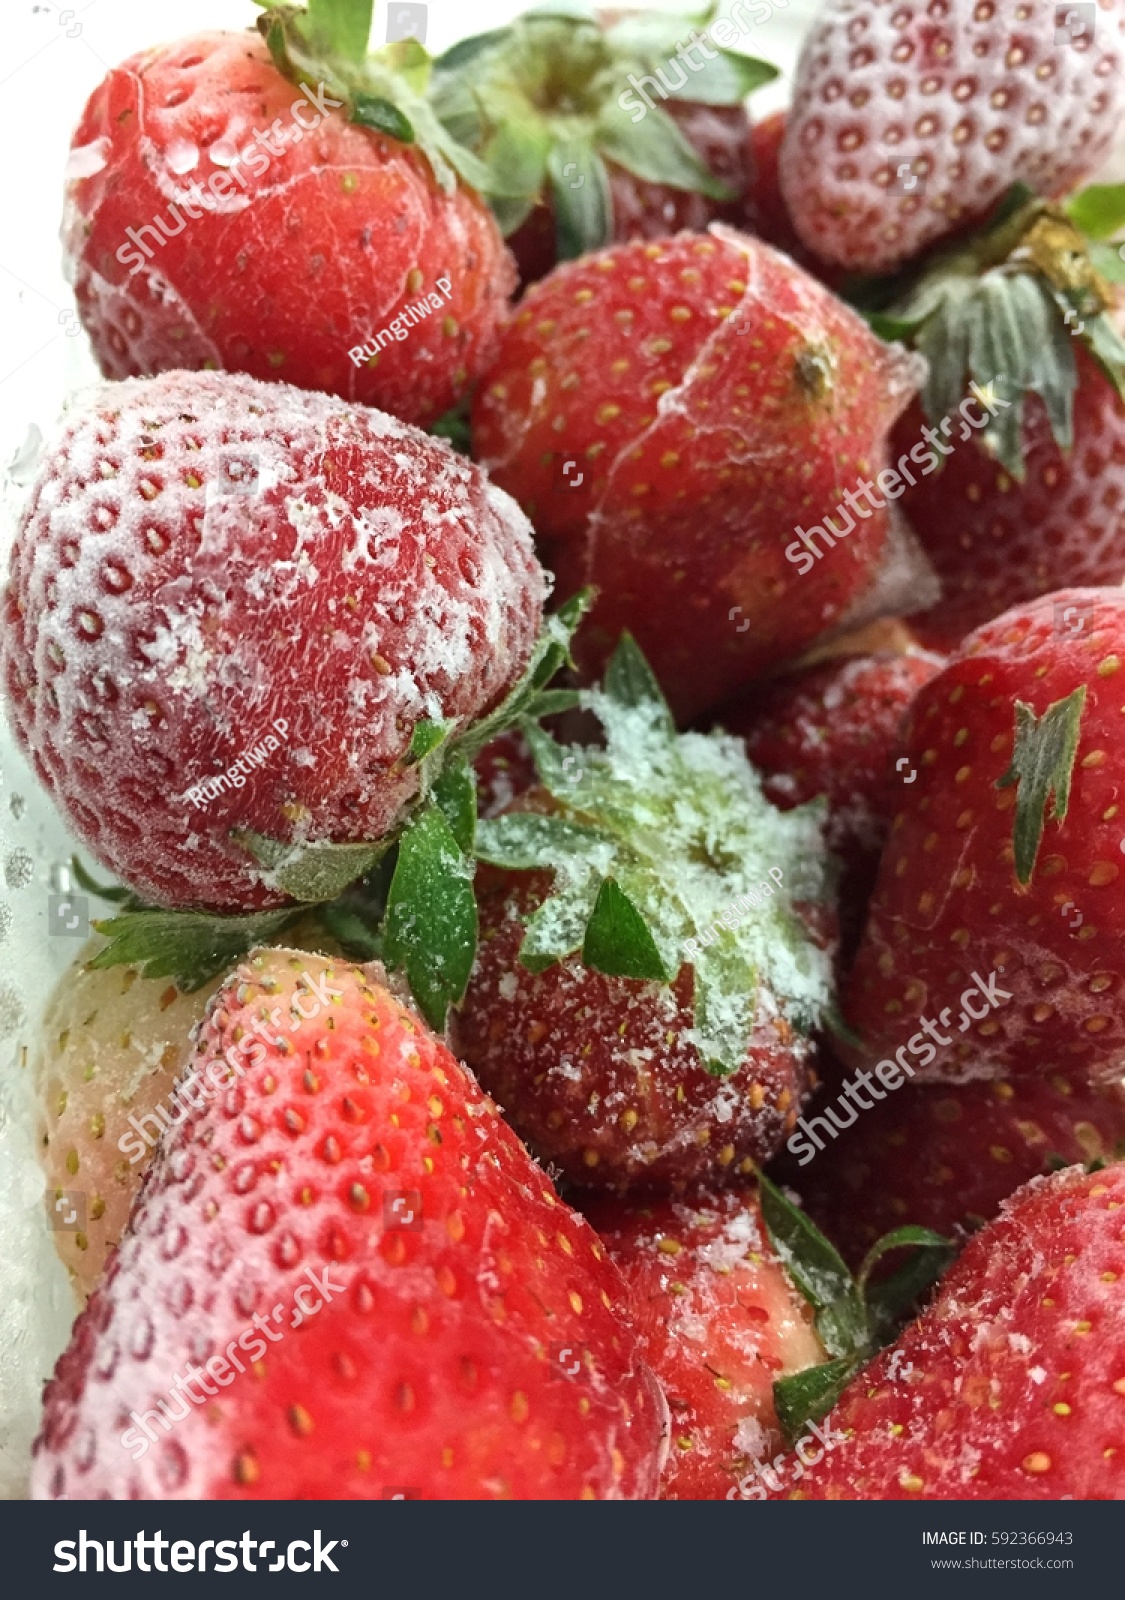 Frozen Strawberries #592366943